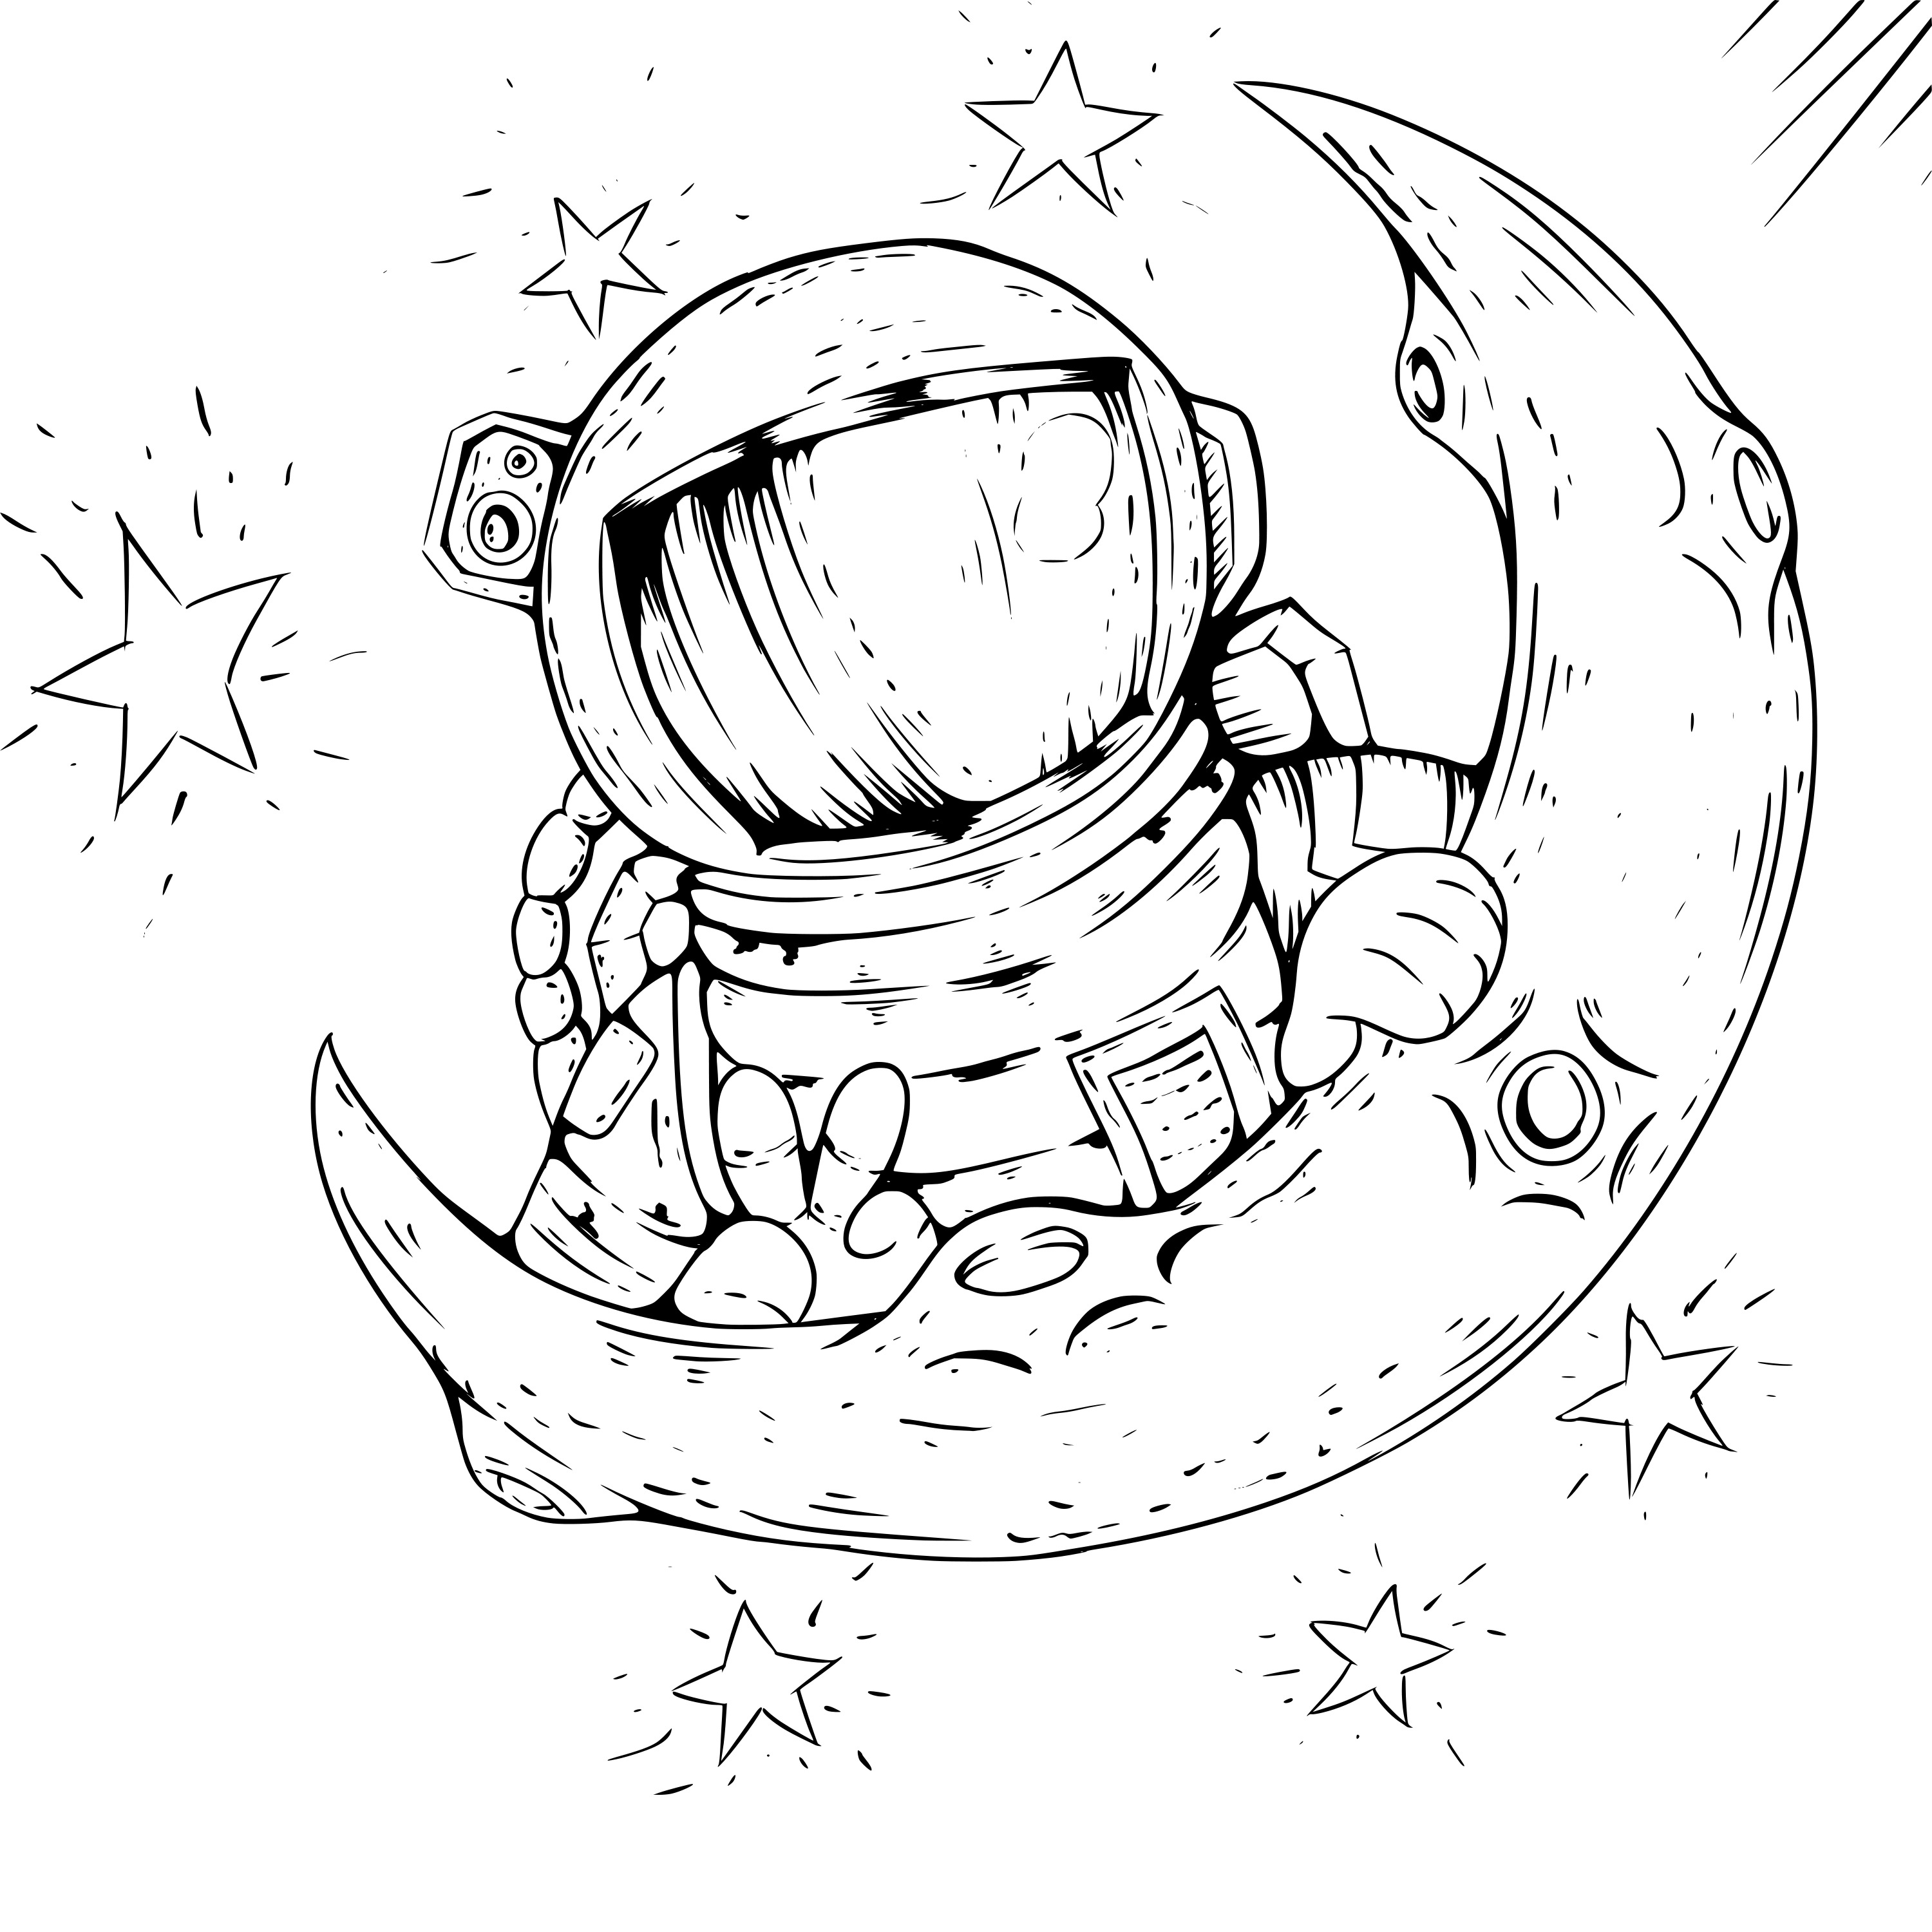 Рисунок ко Дню космонавтики карандашом